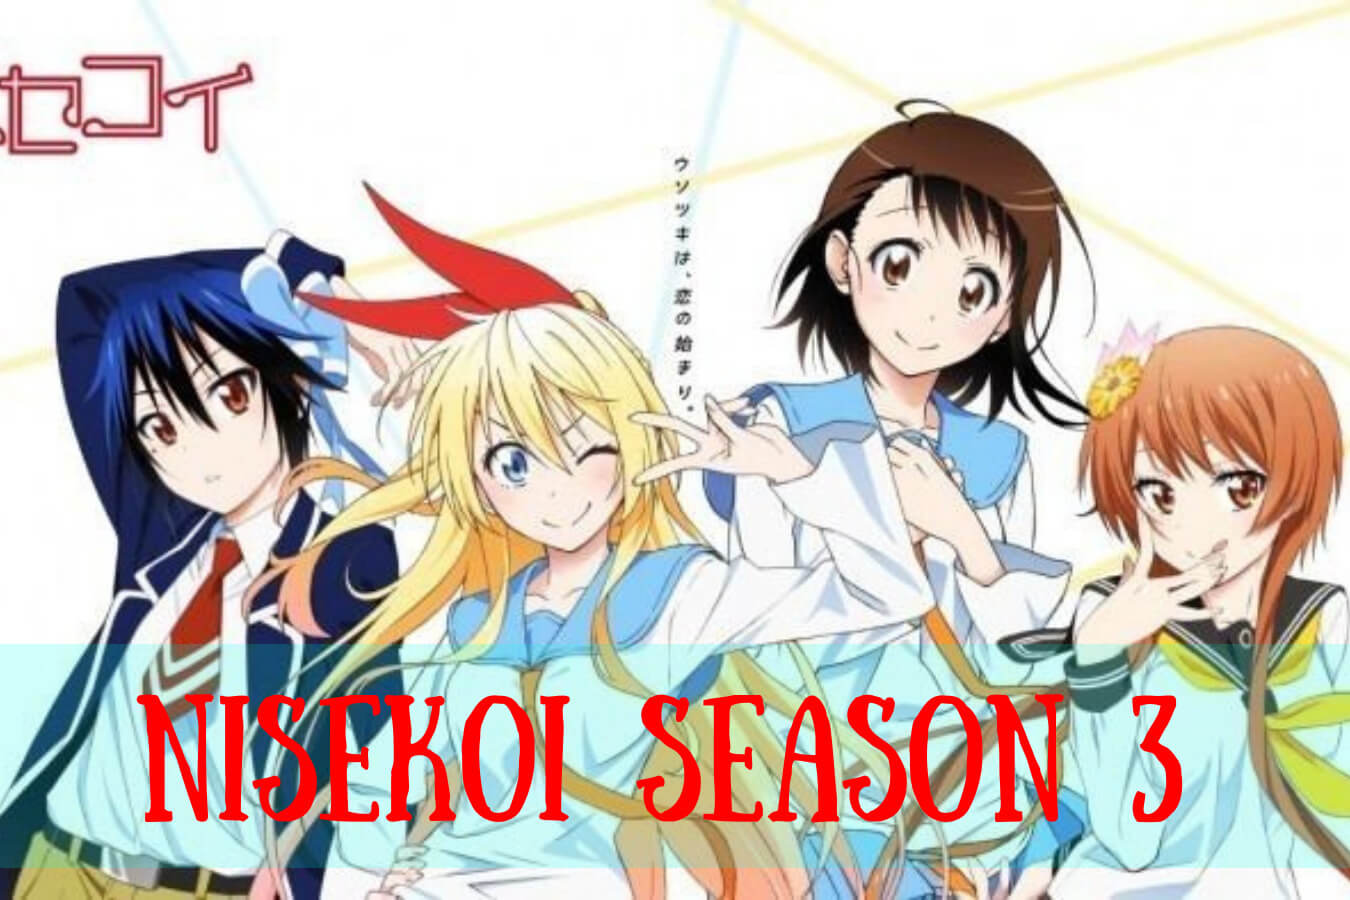 Nisekoi season 3 Release Date